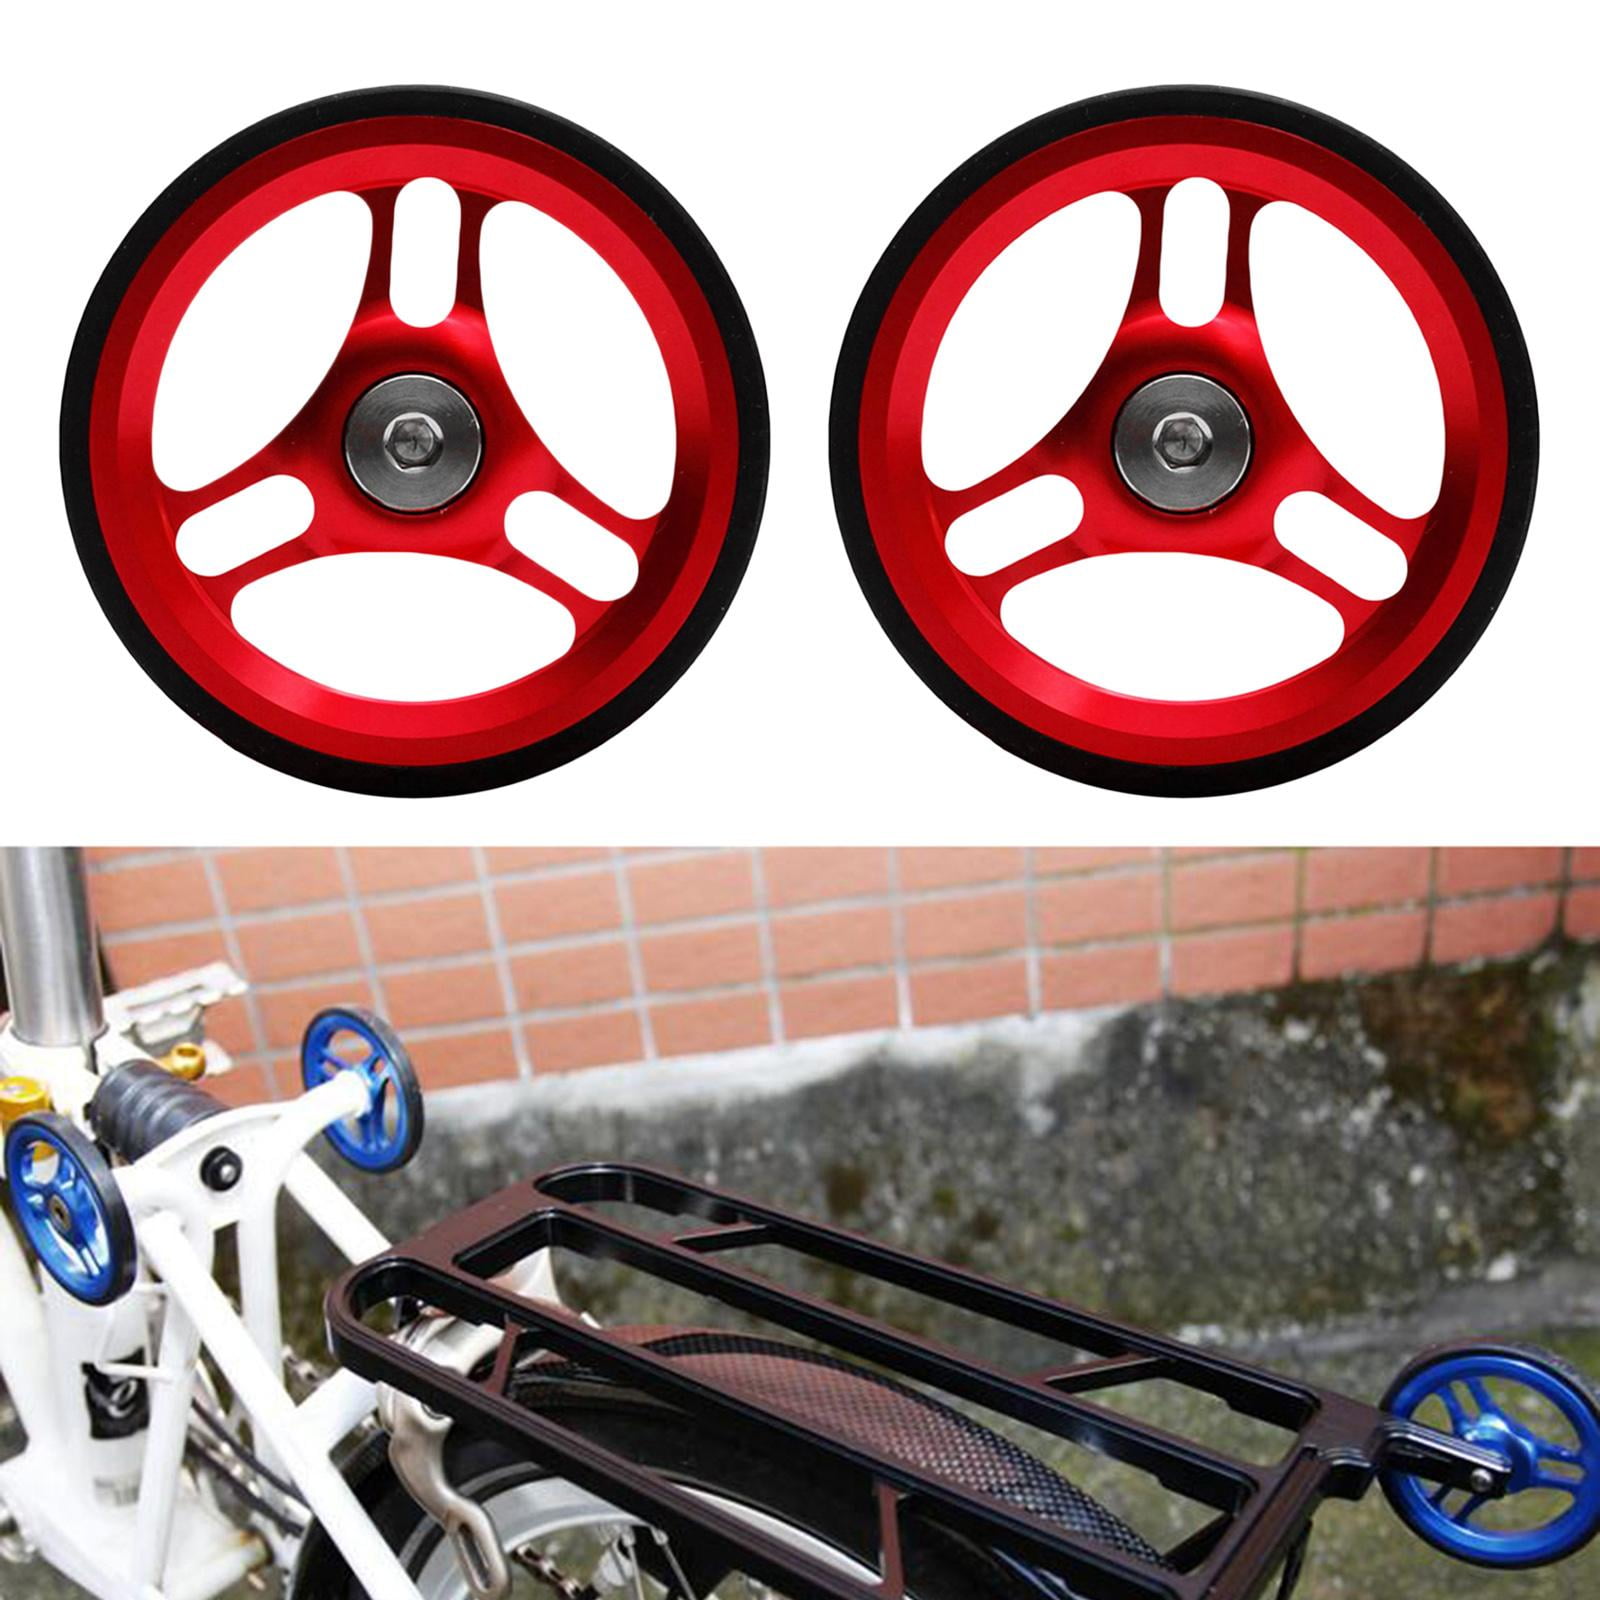 Colcolo Folding Bike Easy Wheel Foldable Bicycle Transport Carry EZ Wheels Pushing Refit Transportation Wheel for Brompton with Titanium Alloy Screws